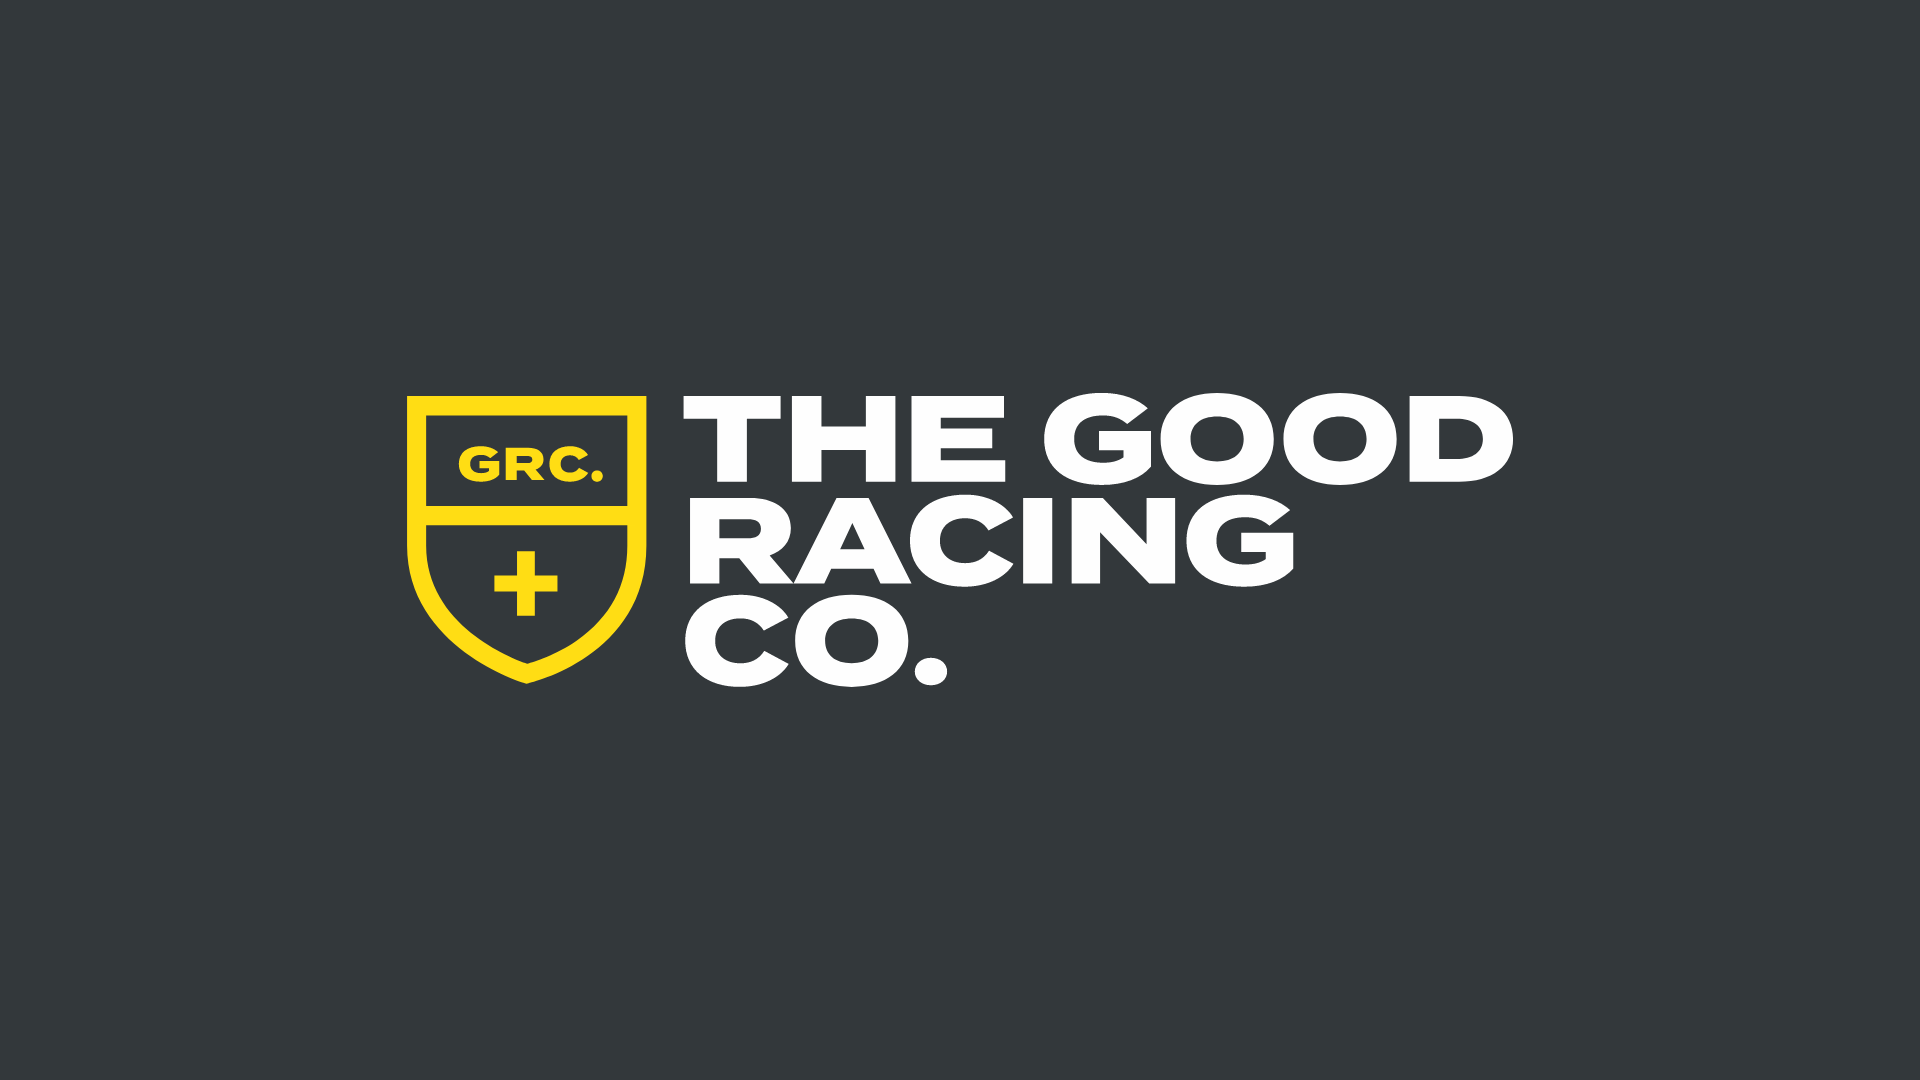 News, Go Racing